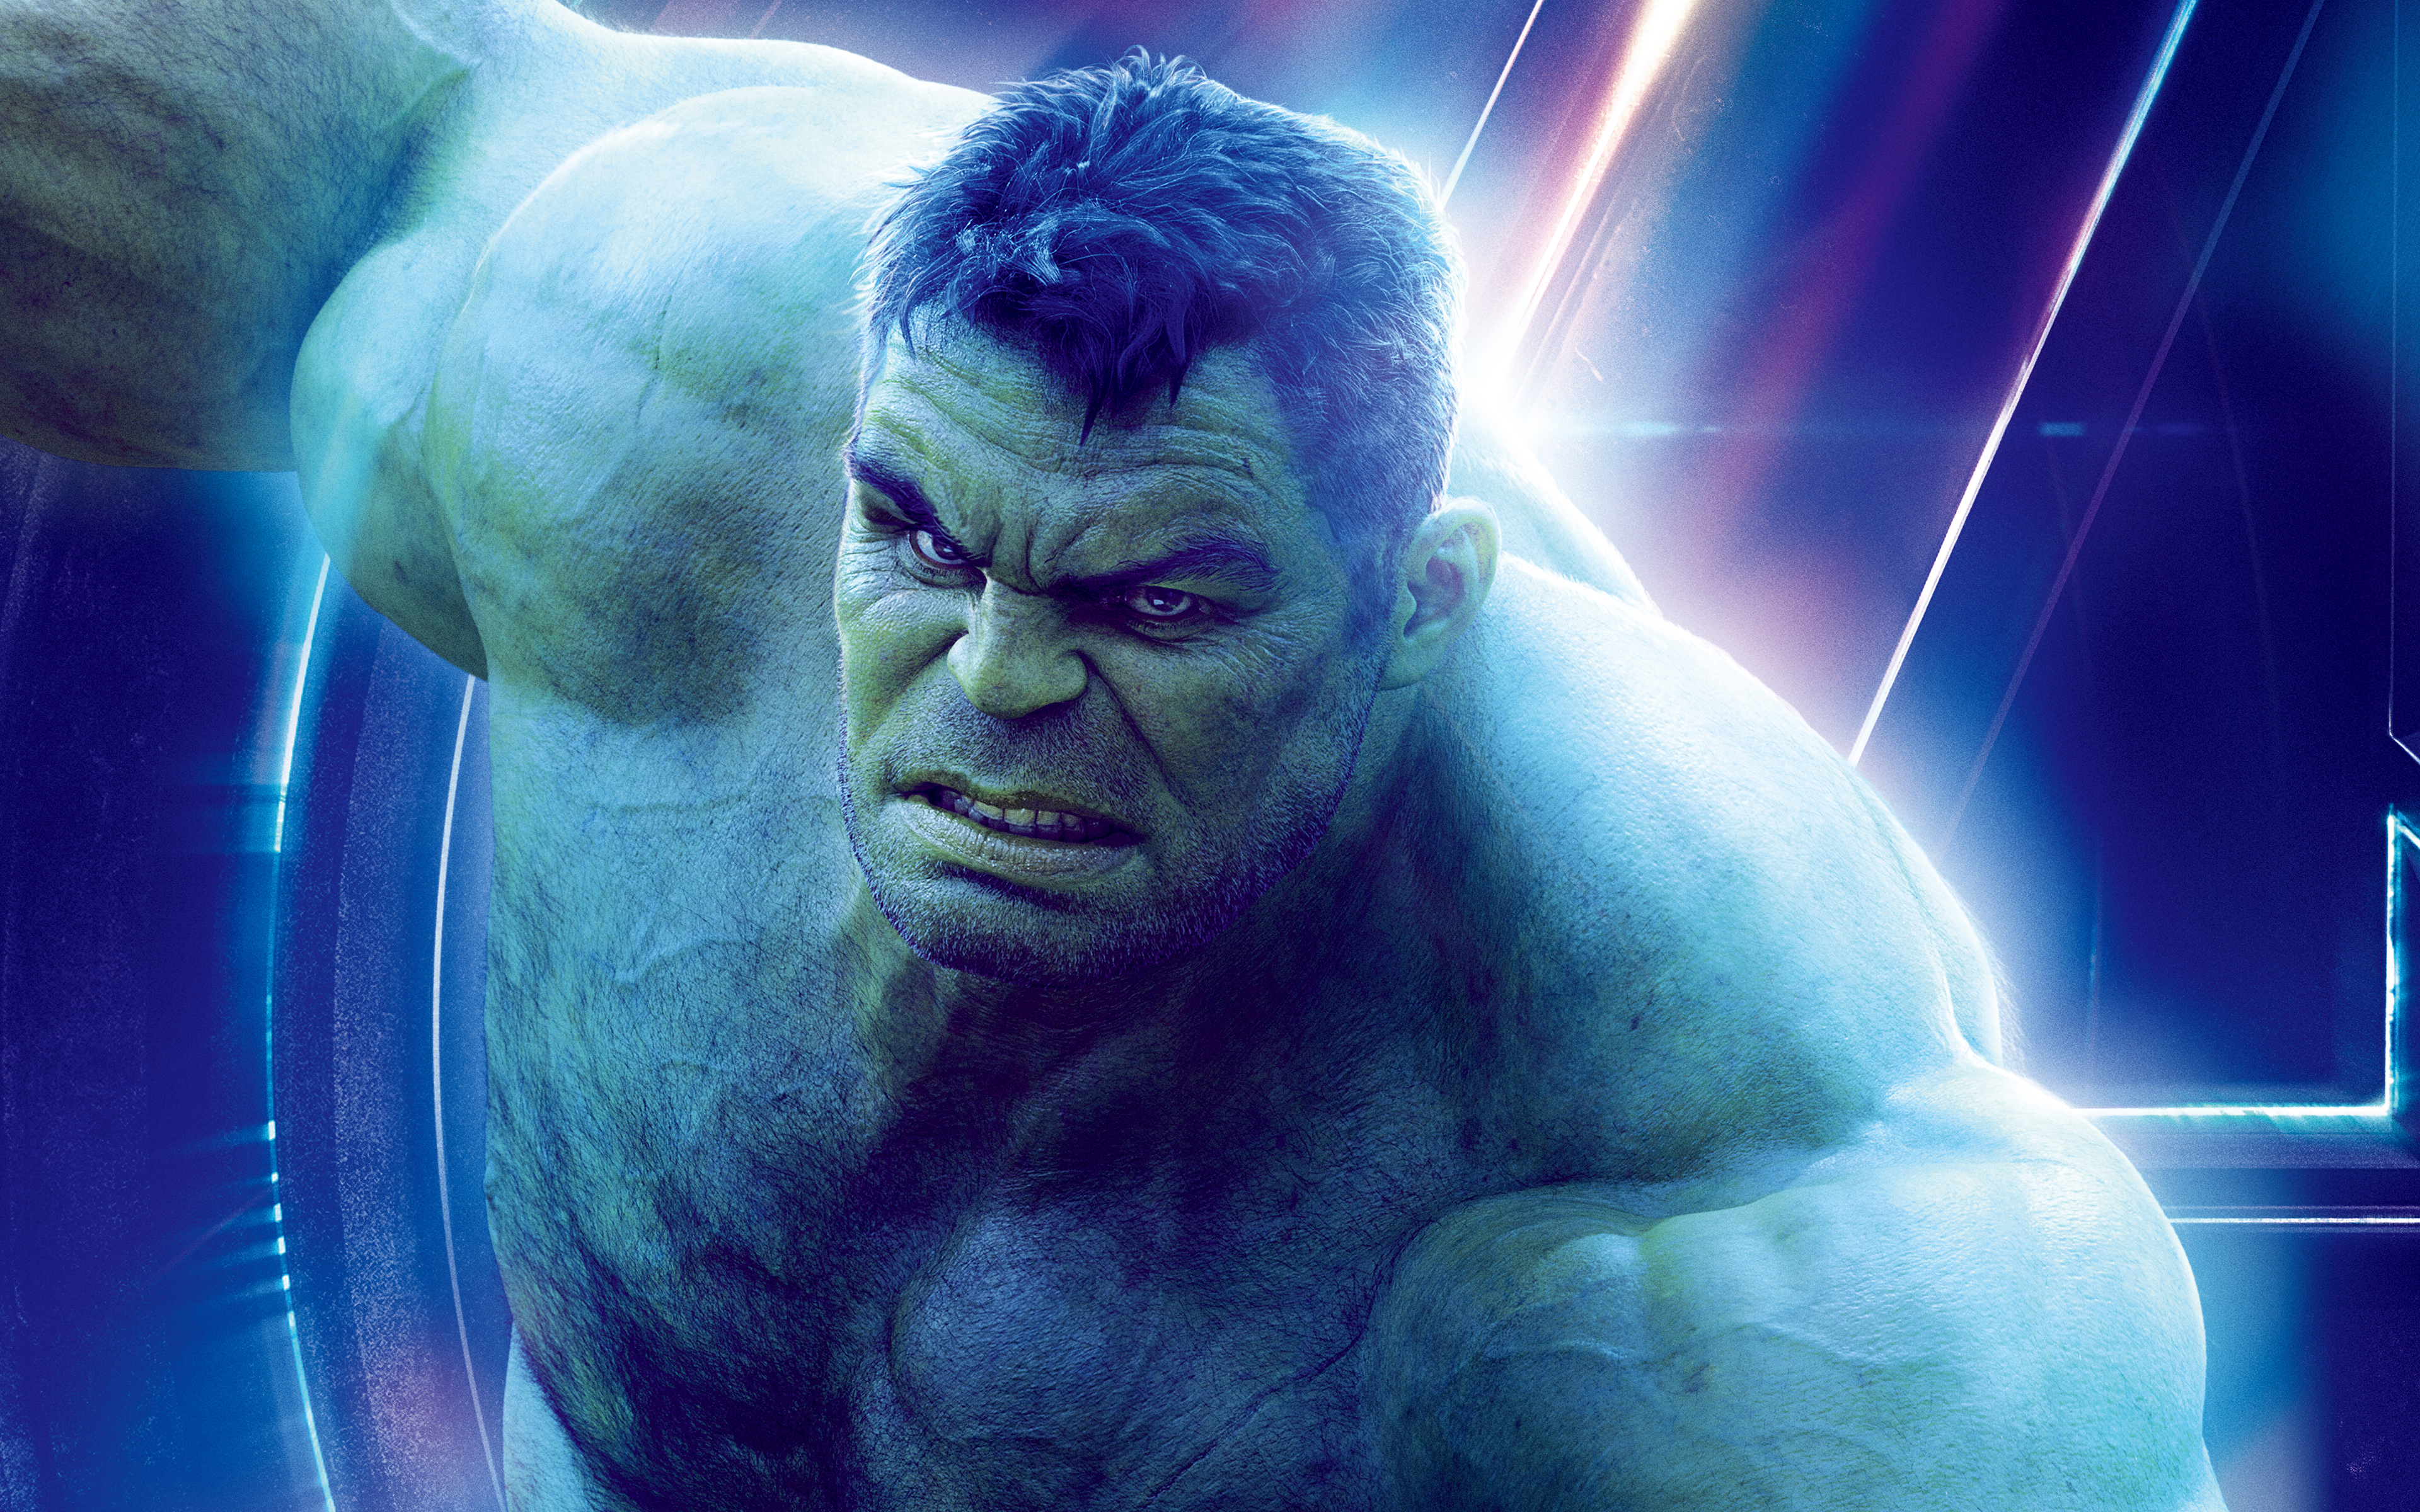 Hulk in Avengers Infinity War 4K 8K5474717549 - Hulk in Avengers Infinity War 4K 8K - War, Solo, Infinity, Hulk, Avengers